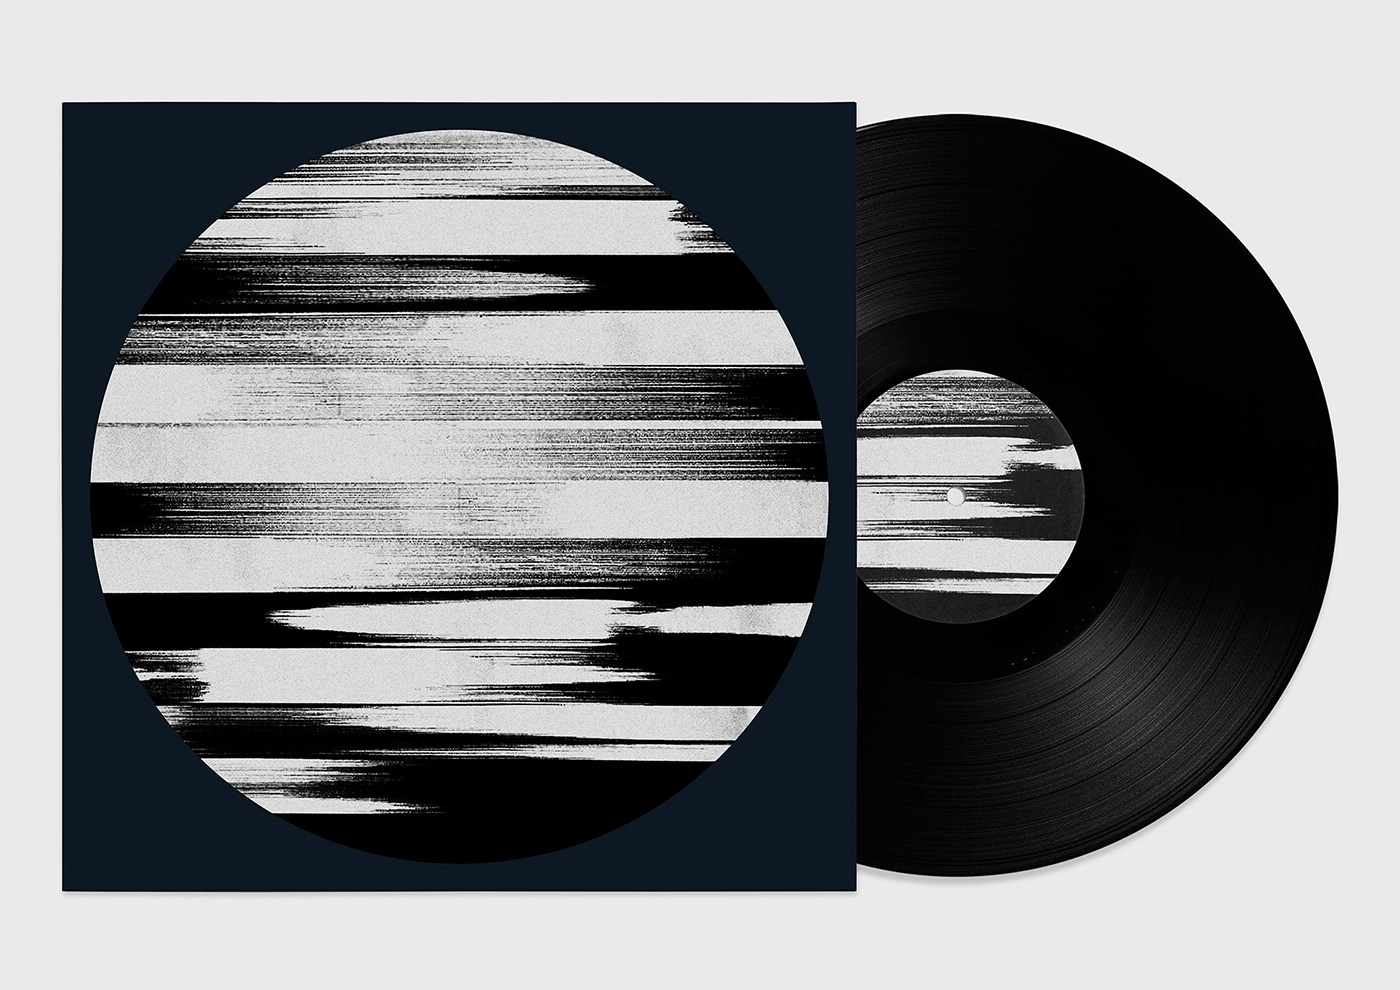 ep vinyl artwork minimal Album graphic Layout